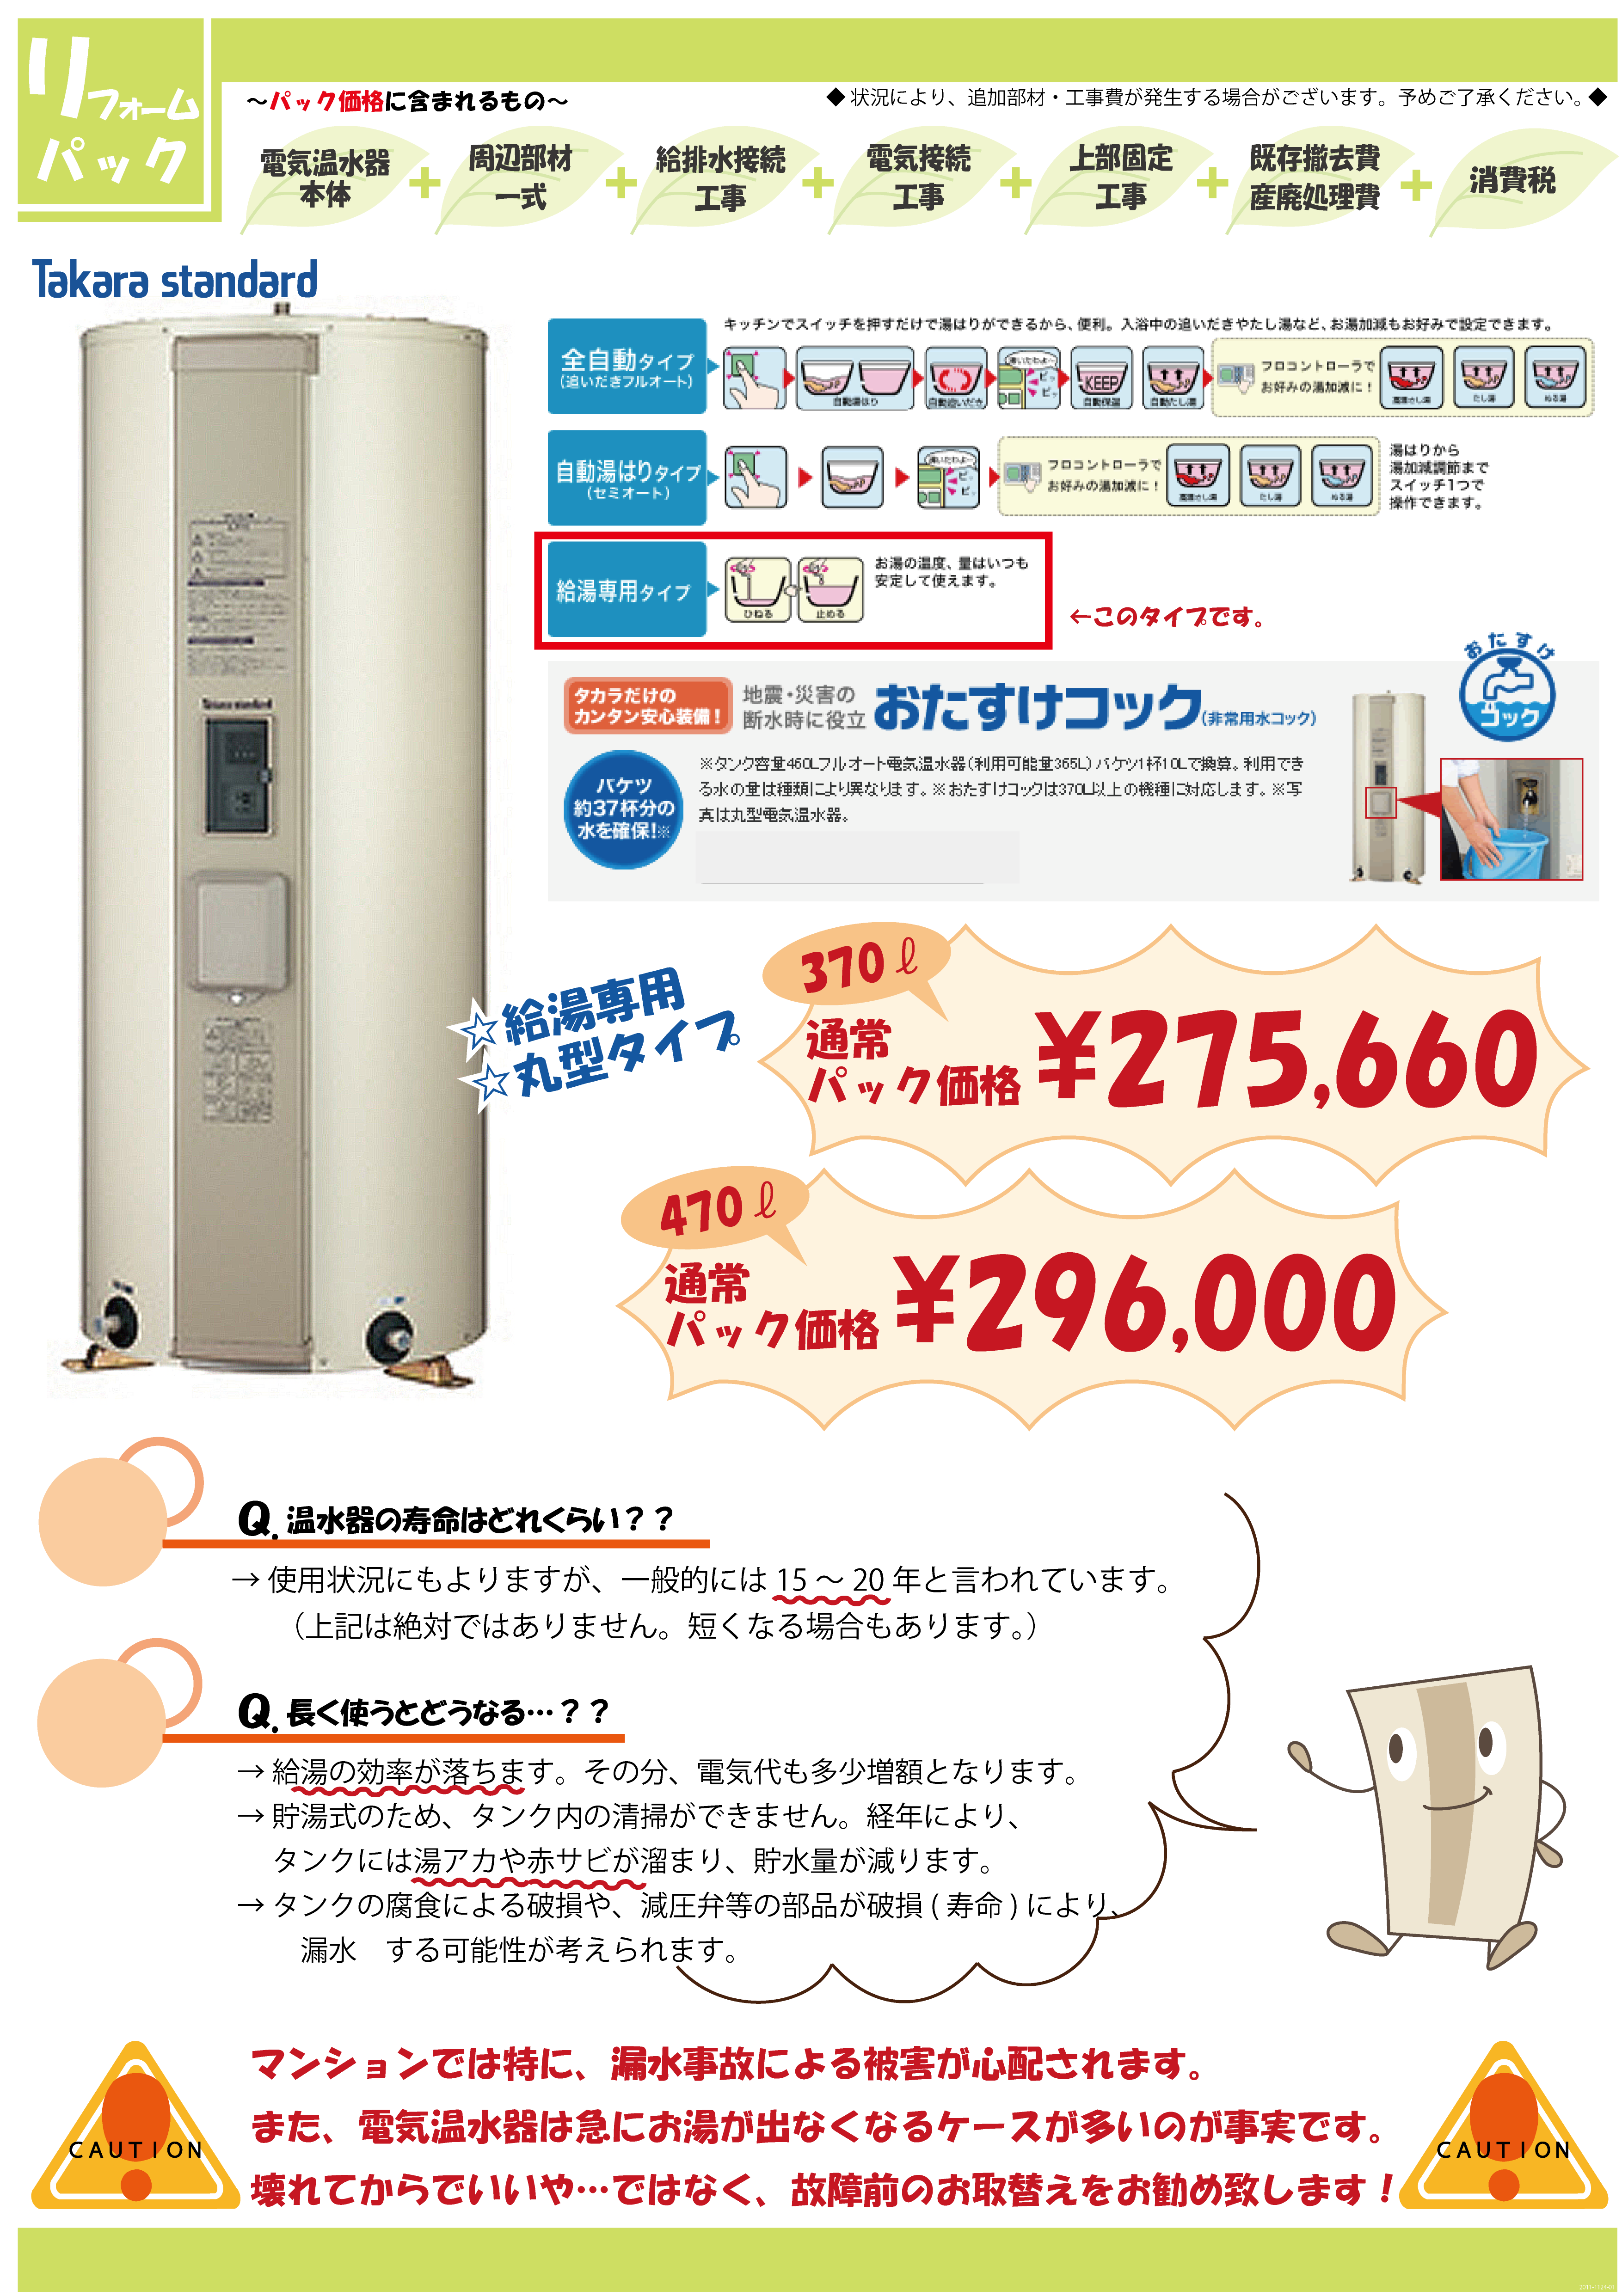 SRG-465G 三菱電機 MITSUBISHI 電気温水器 460L・給湯専用タイプ 標準圧力型 送料無料 - 1